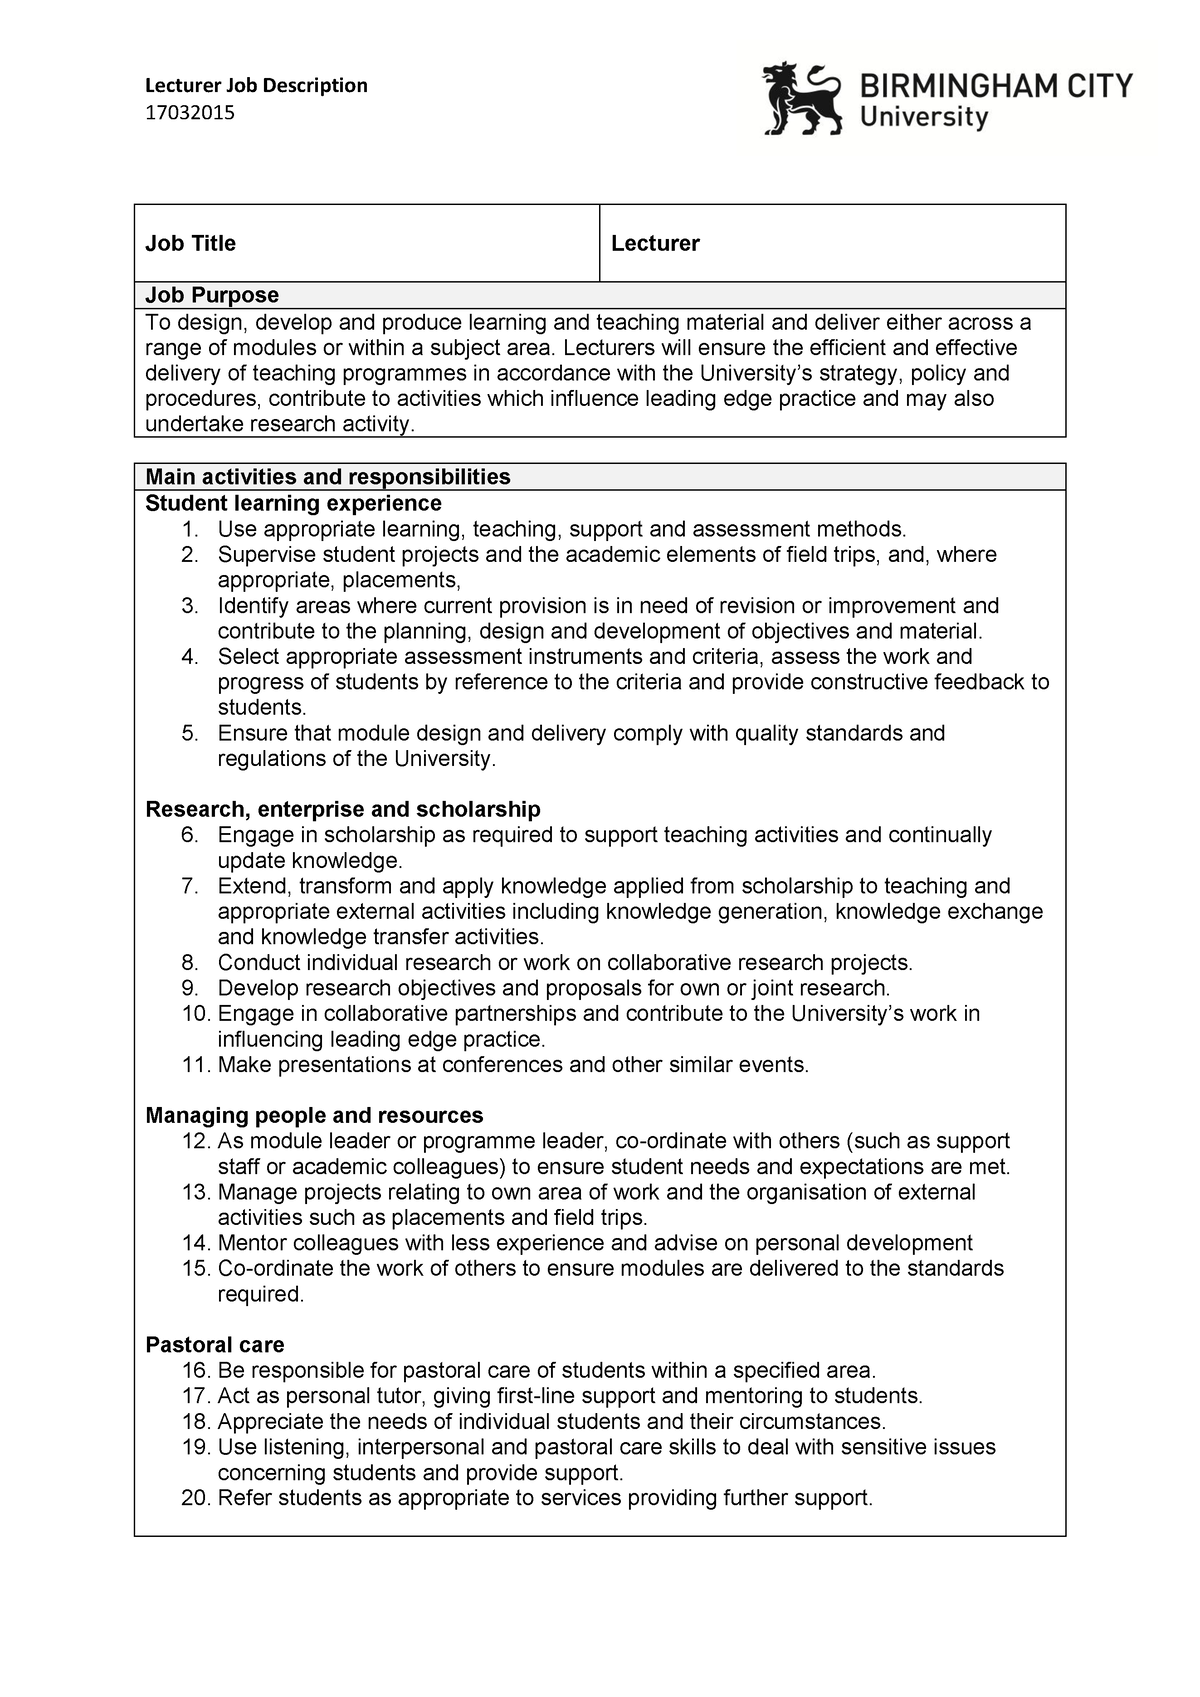 sample job description pearson education